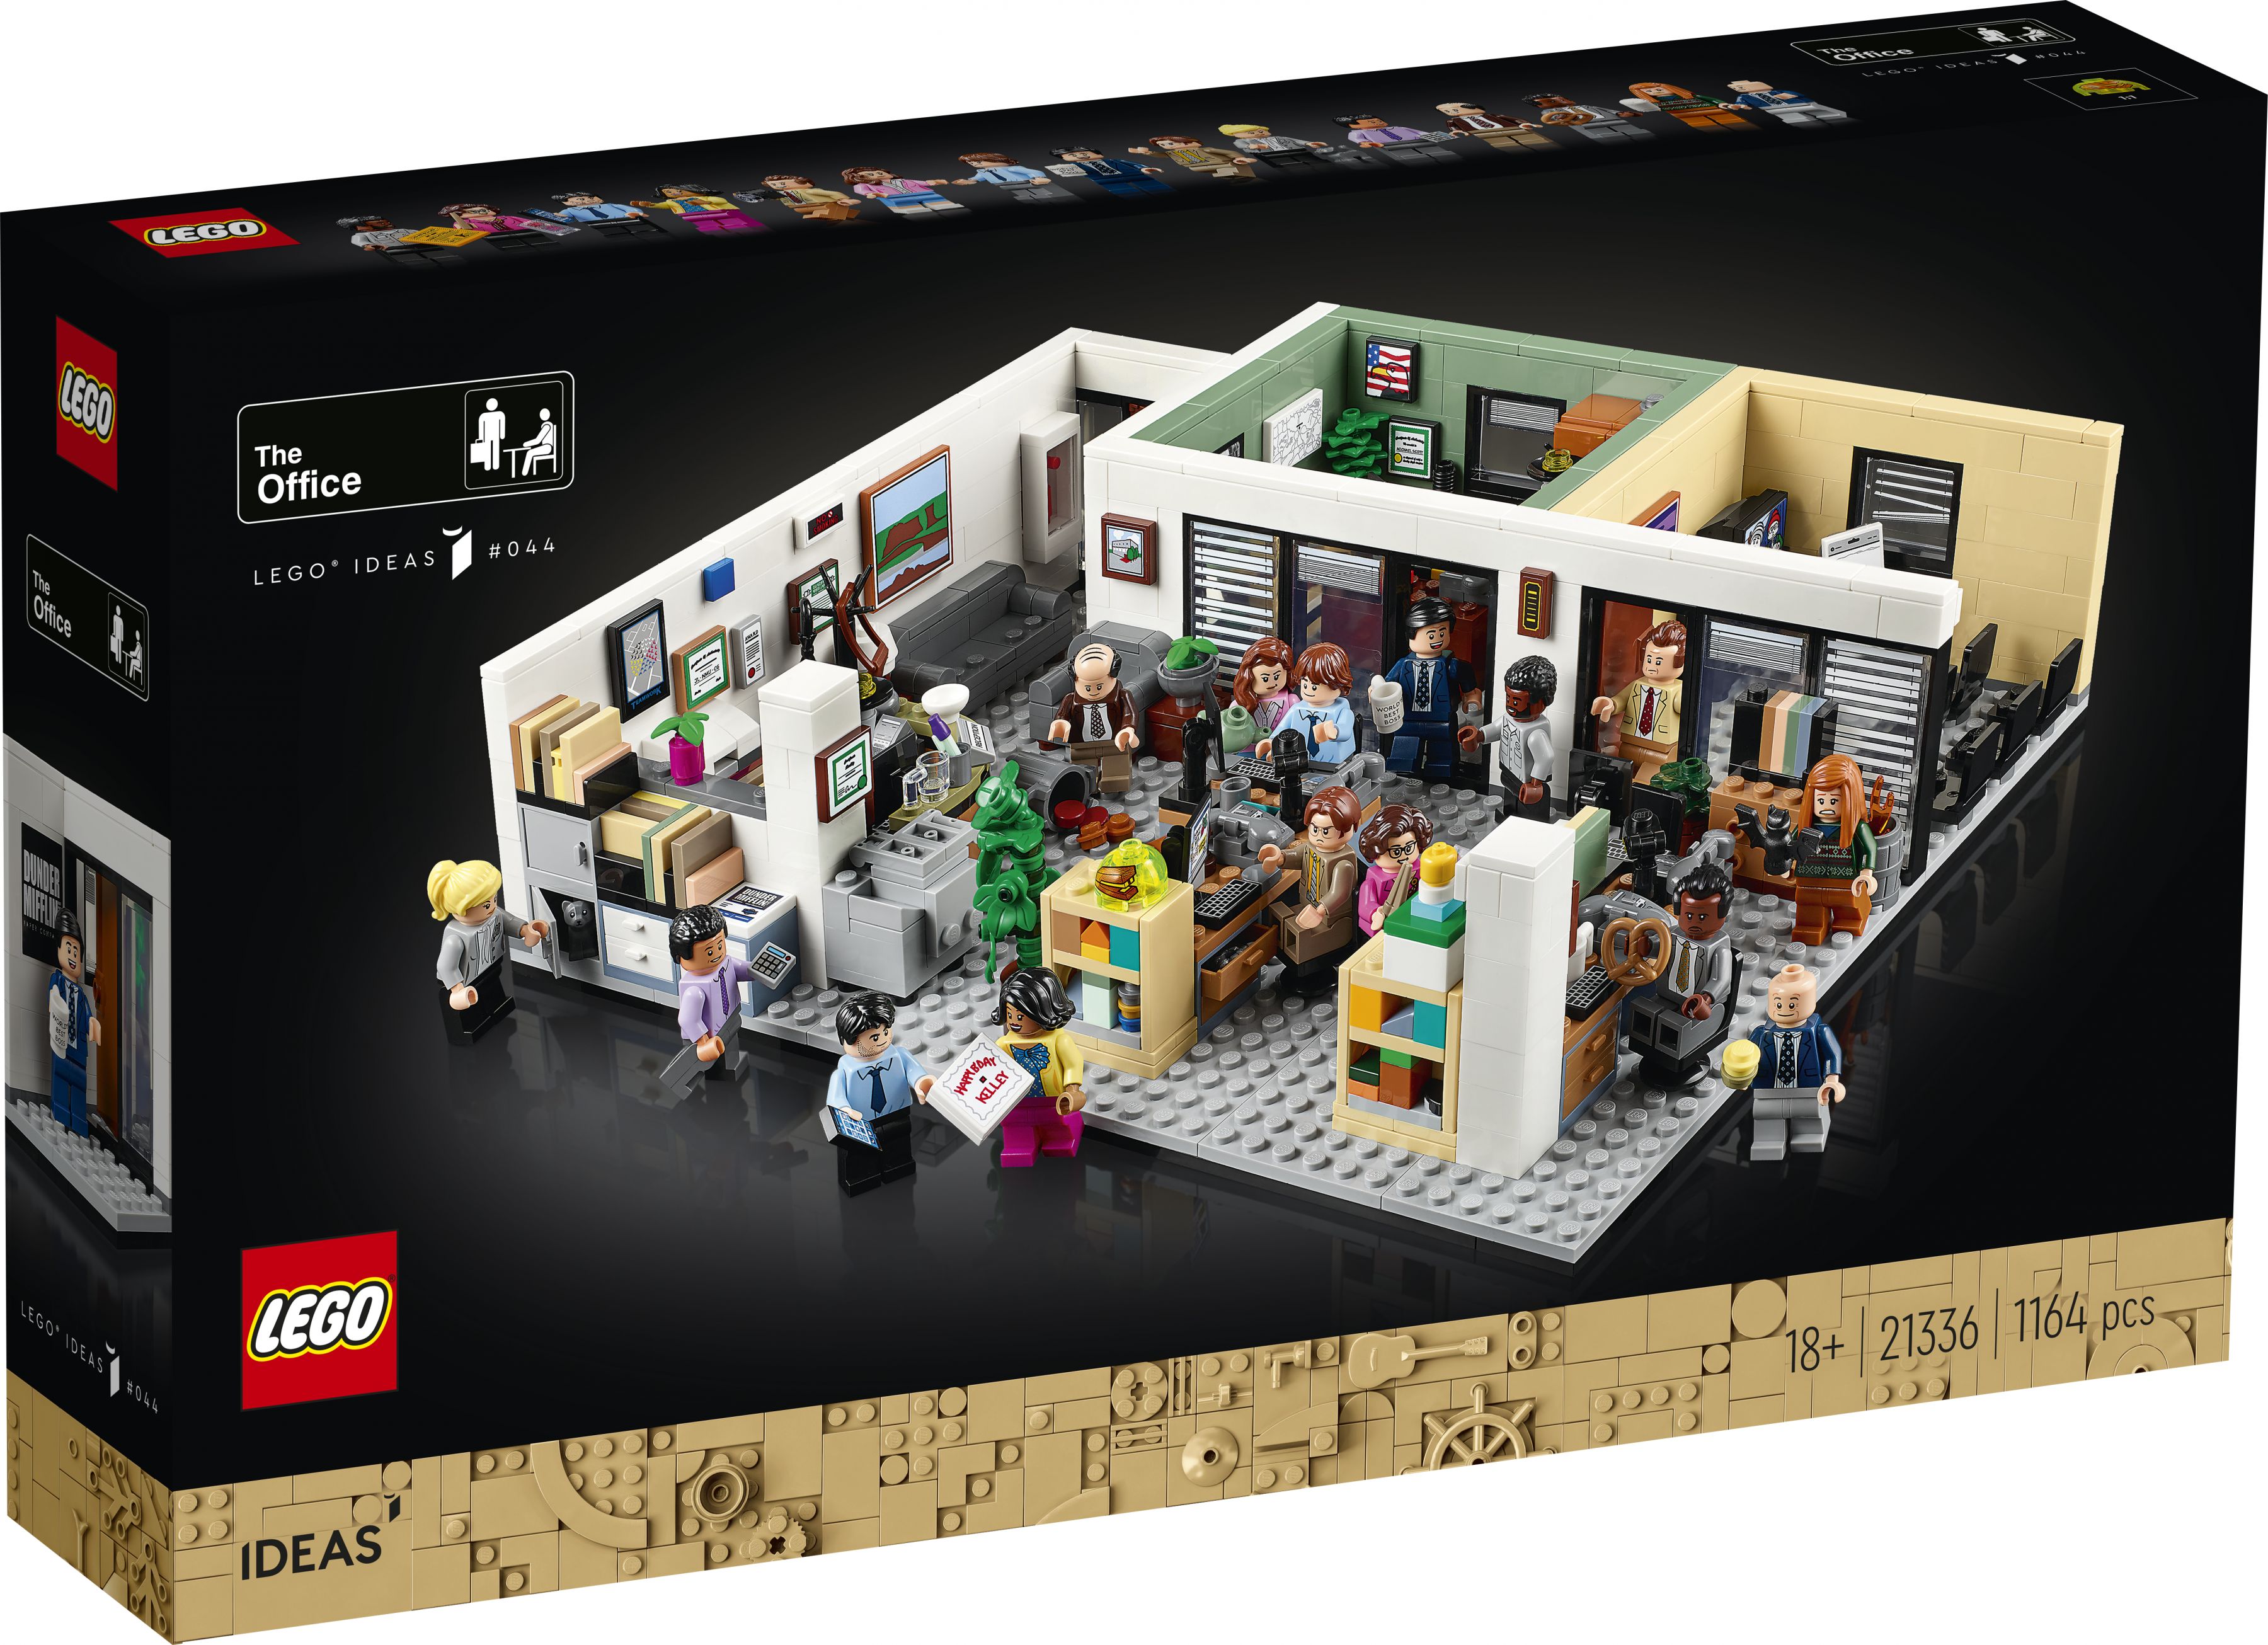 LEGO Ideas 21336 The Office LEGO_21336_Box1_V29.jpg